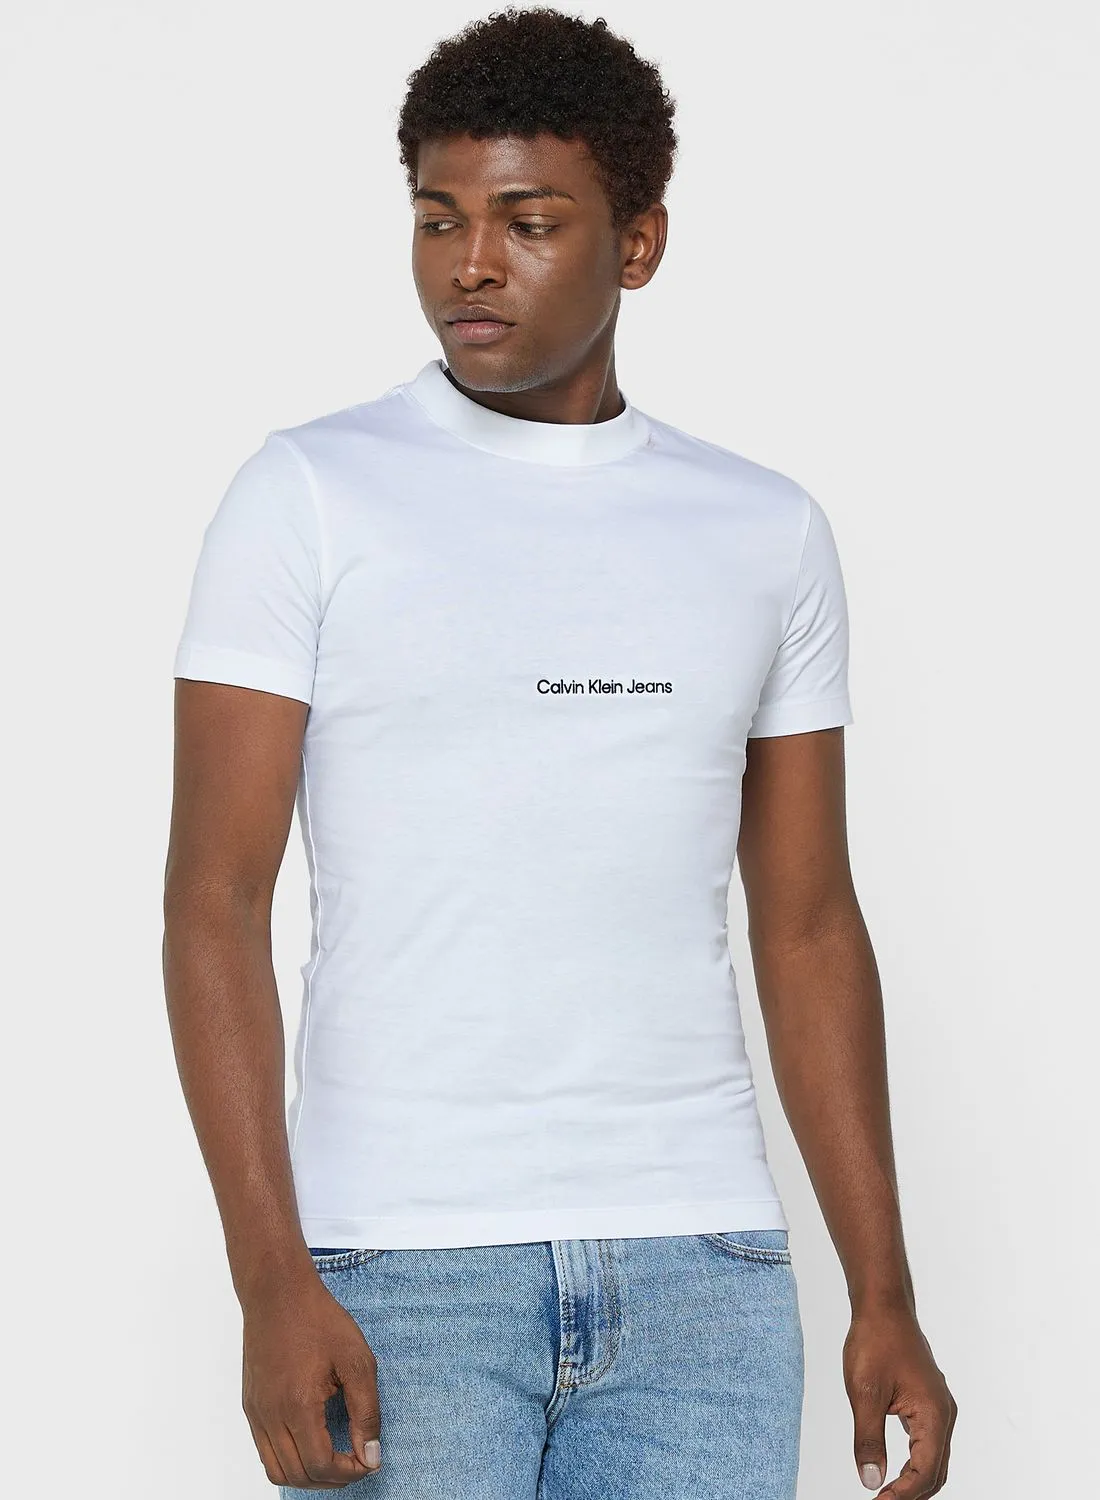 Calvin Klein Jeans Institutional Crew Neck T-Shirt